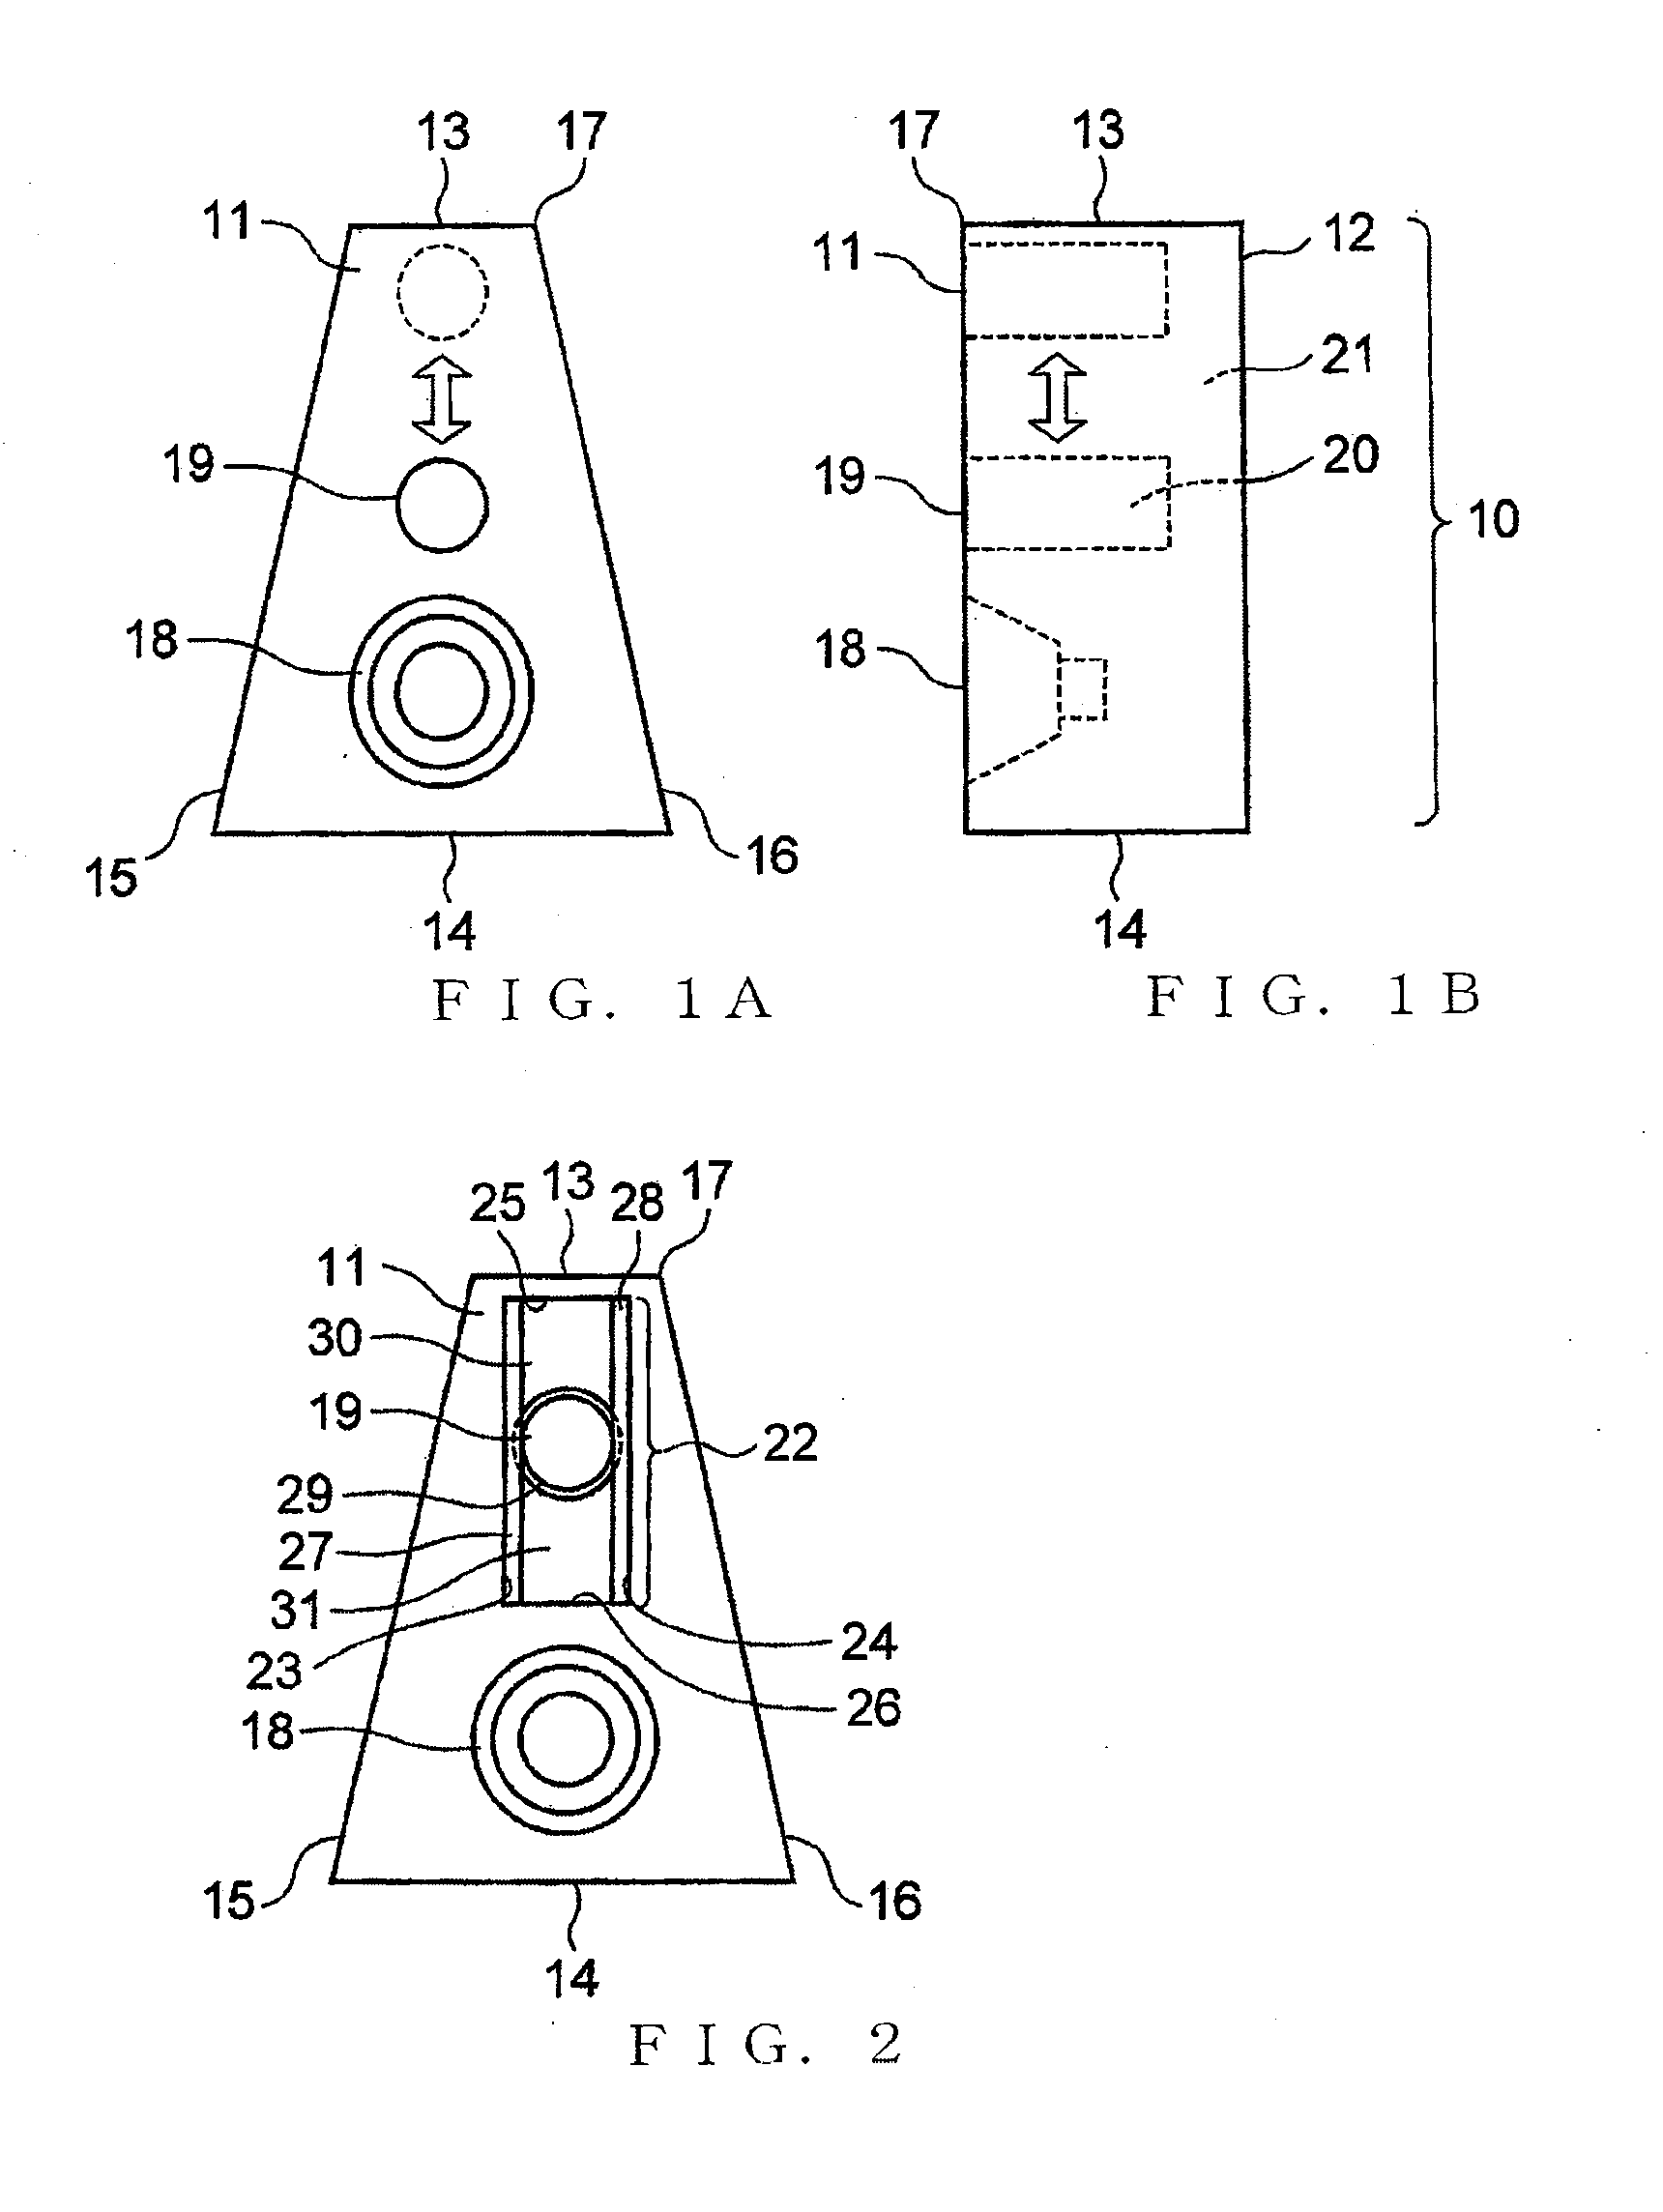 Acoustic structure including helmholtz resonator